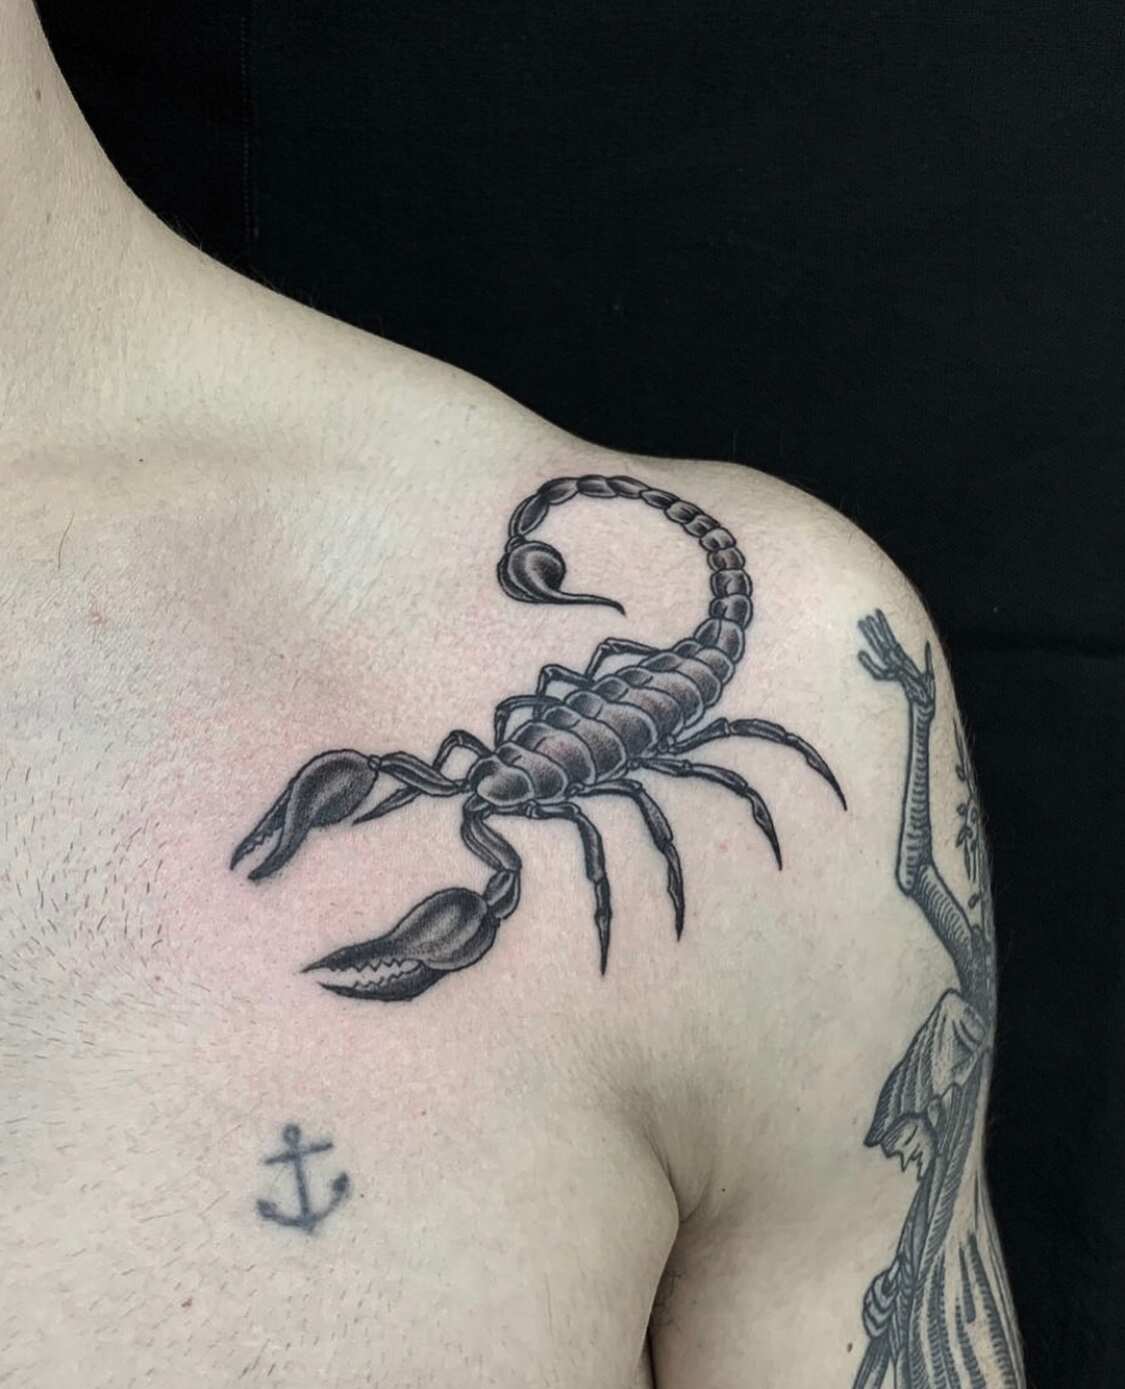 Scorpion tattoo on the forearm by jonas ribeiro - Tattoogrid.net